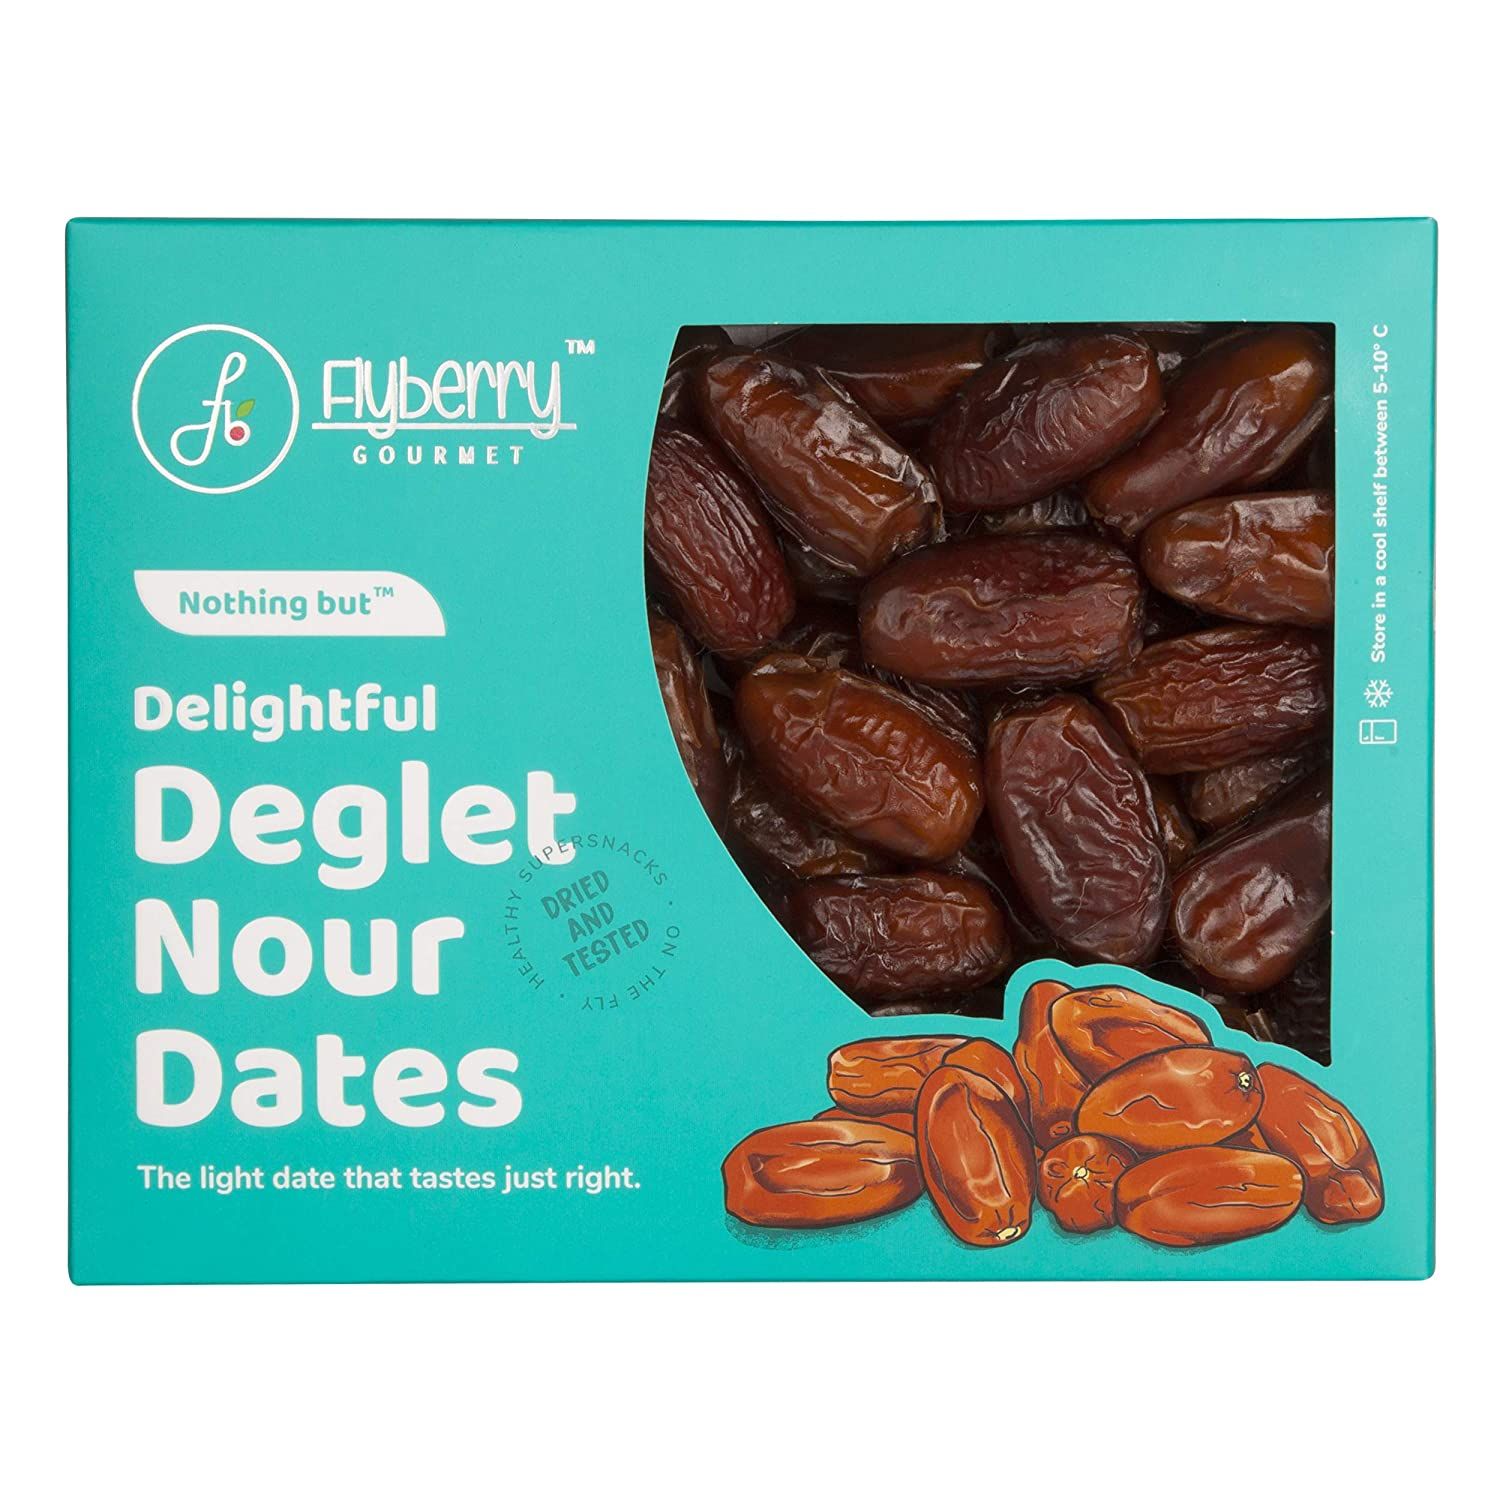 Flyberry Gourmet Daglet Nour Dates Image